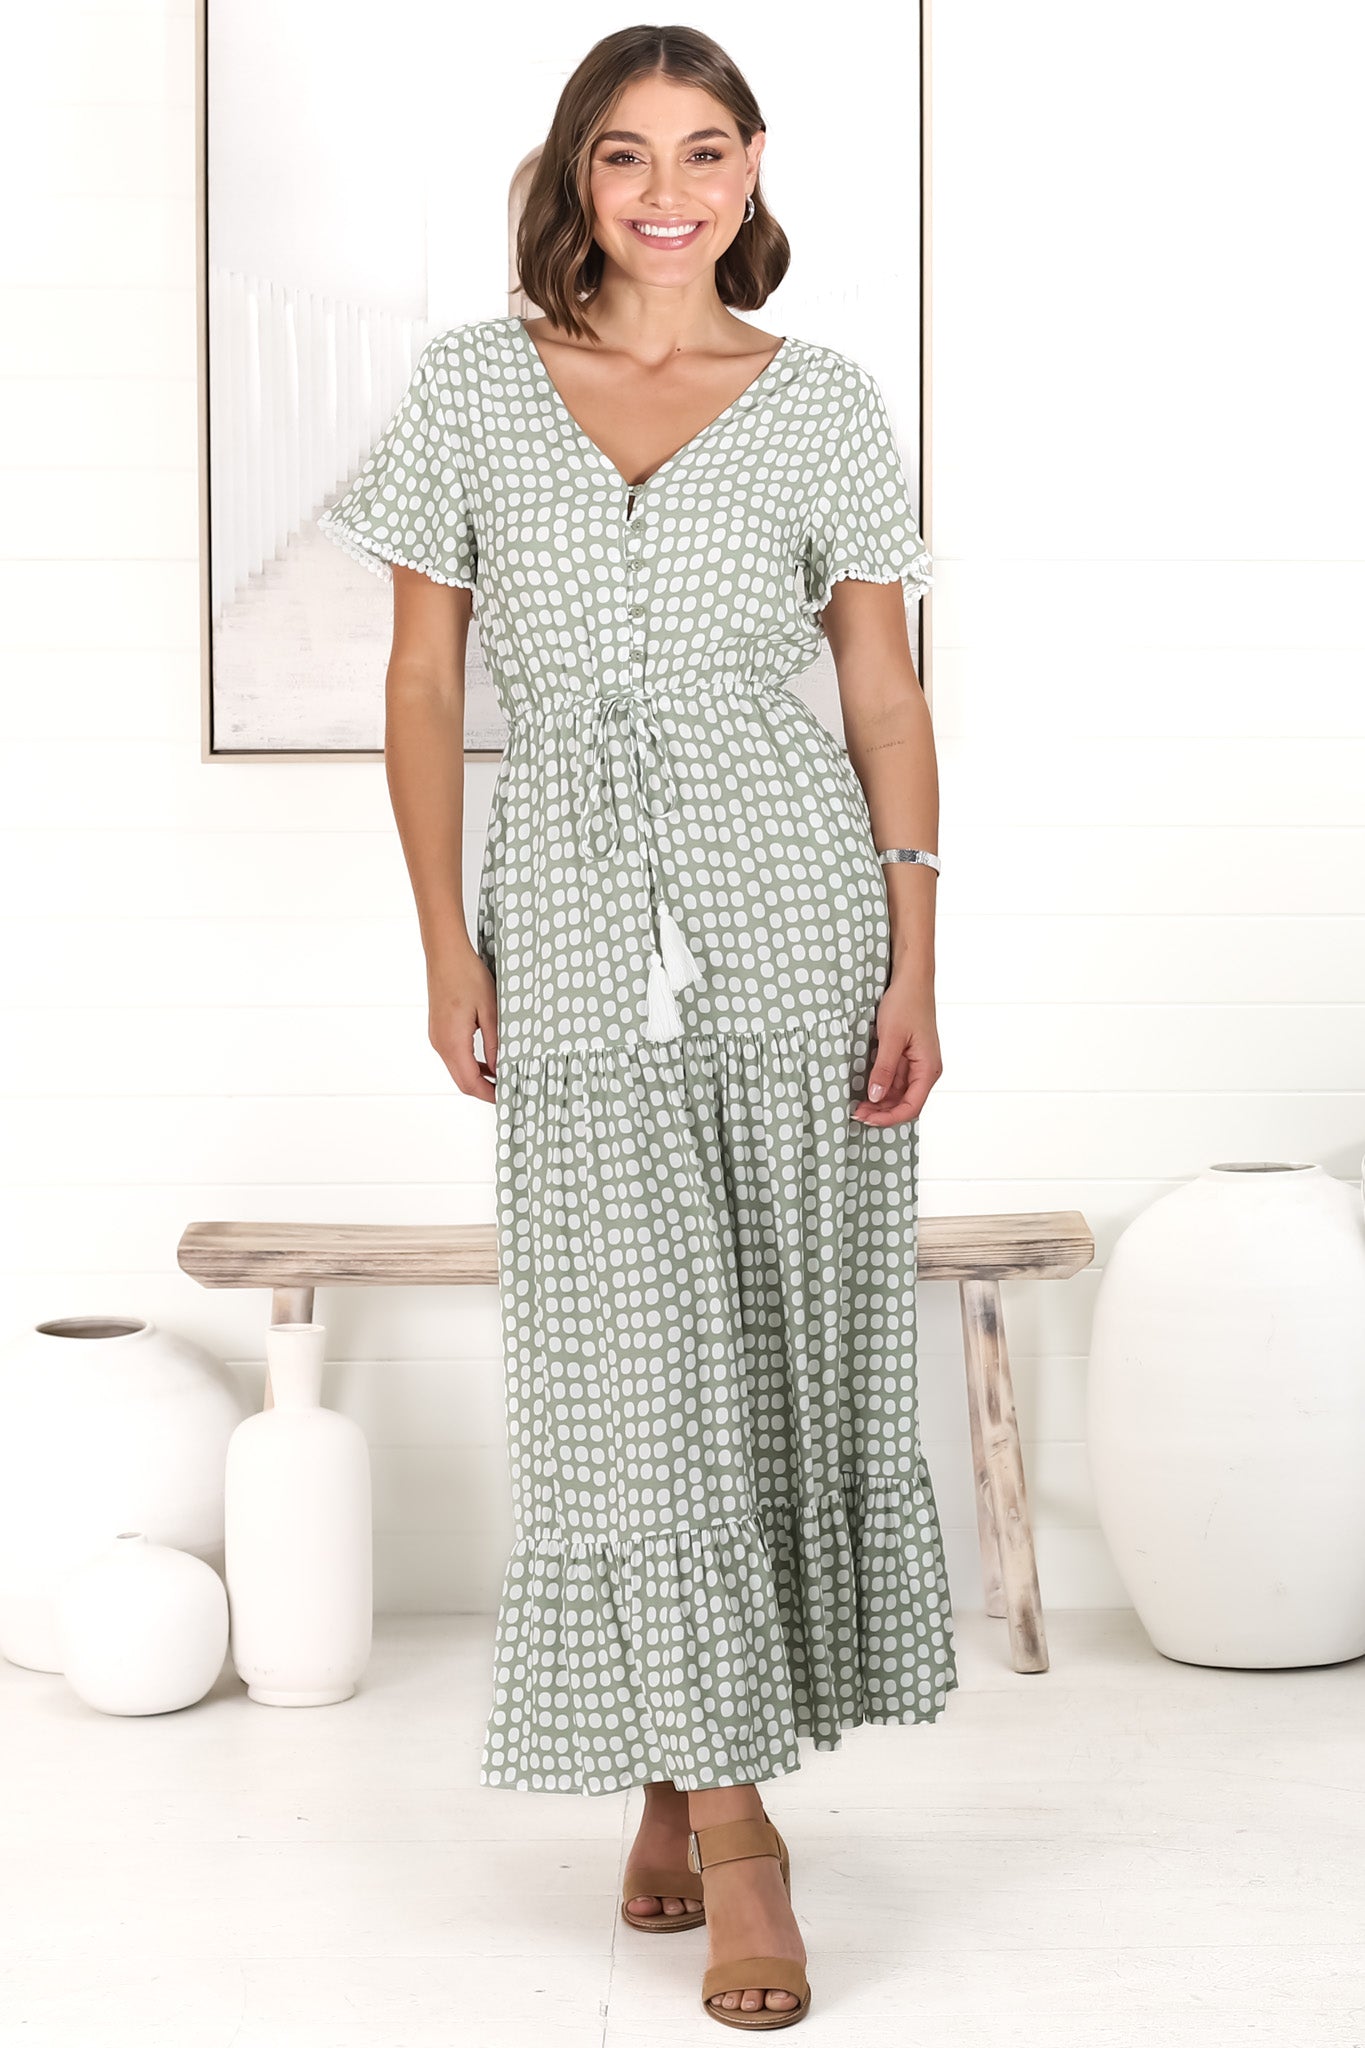 Demy Maxi Dress - Cap Sleeve Lace Trim A Line Dress in Maryanne Print Green